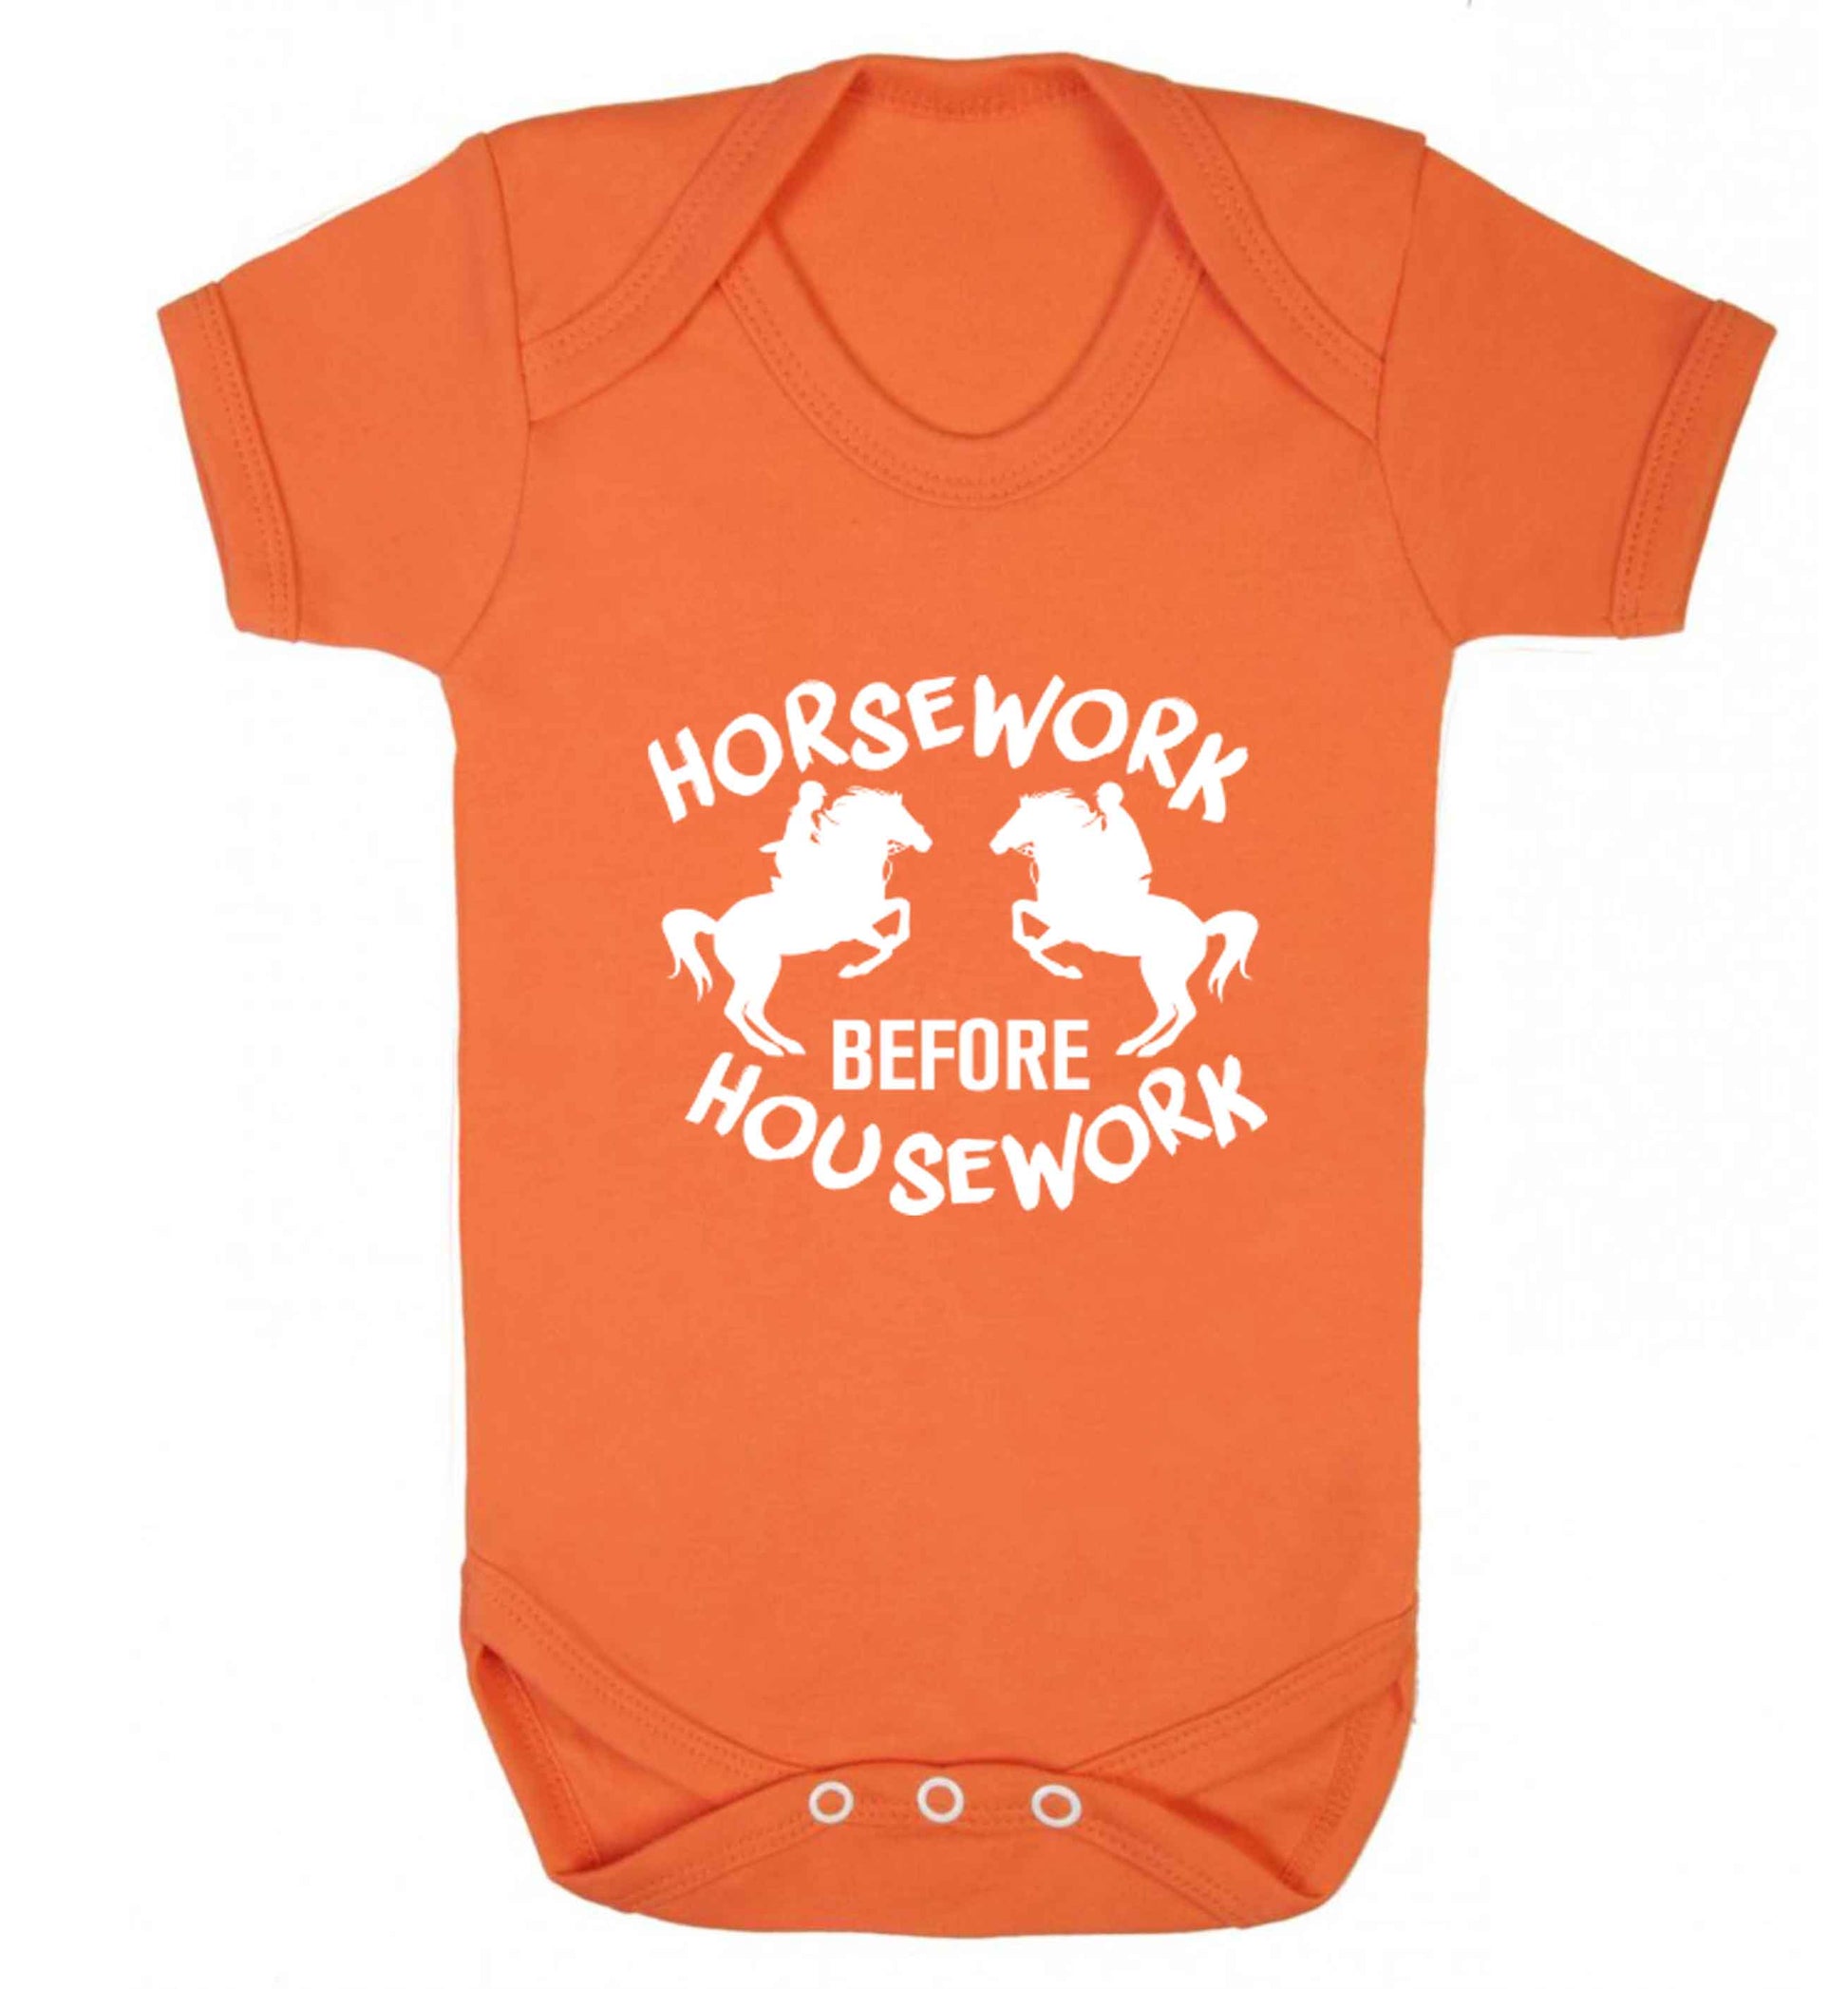 Horsework before housework baby vest orange 18-24 months